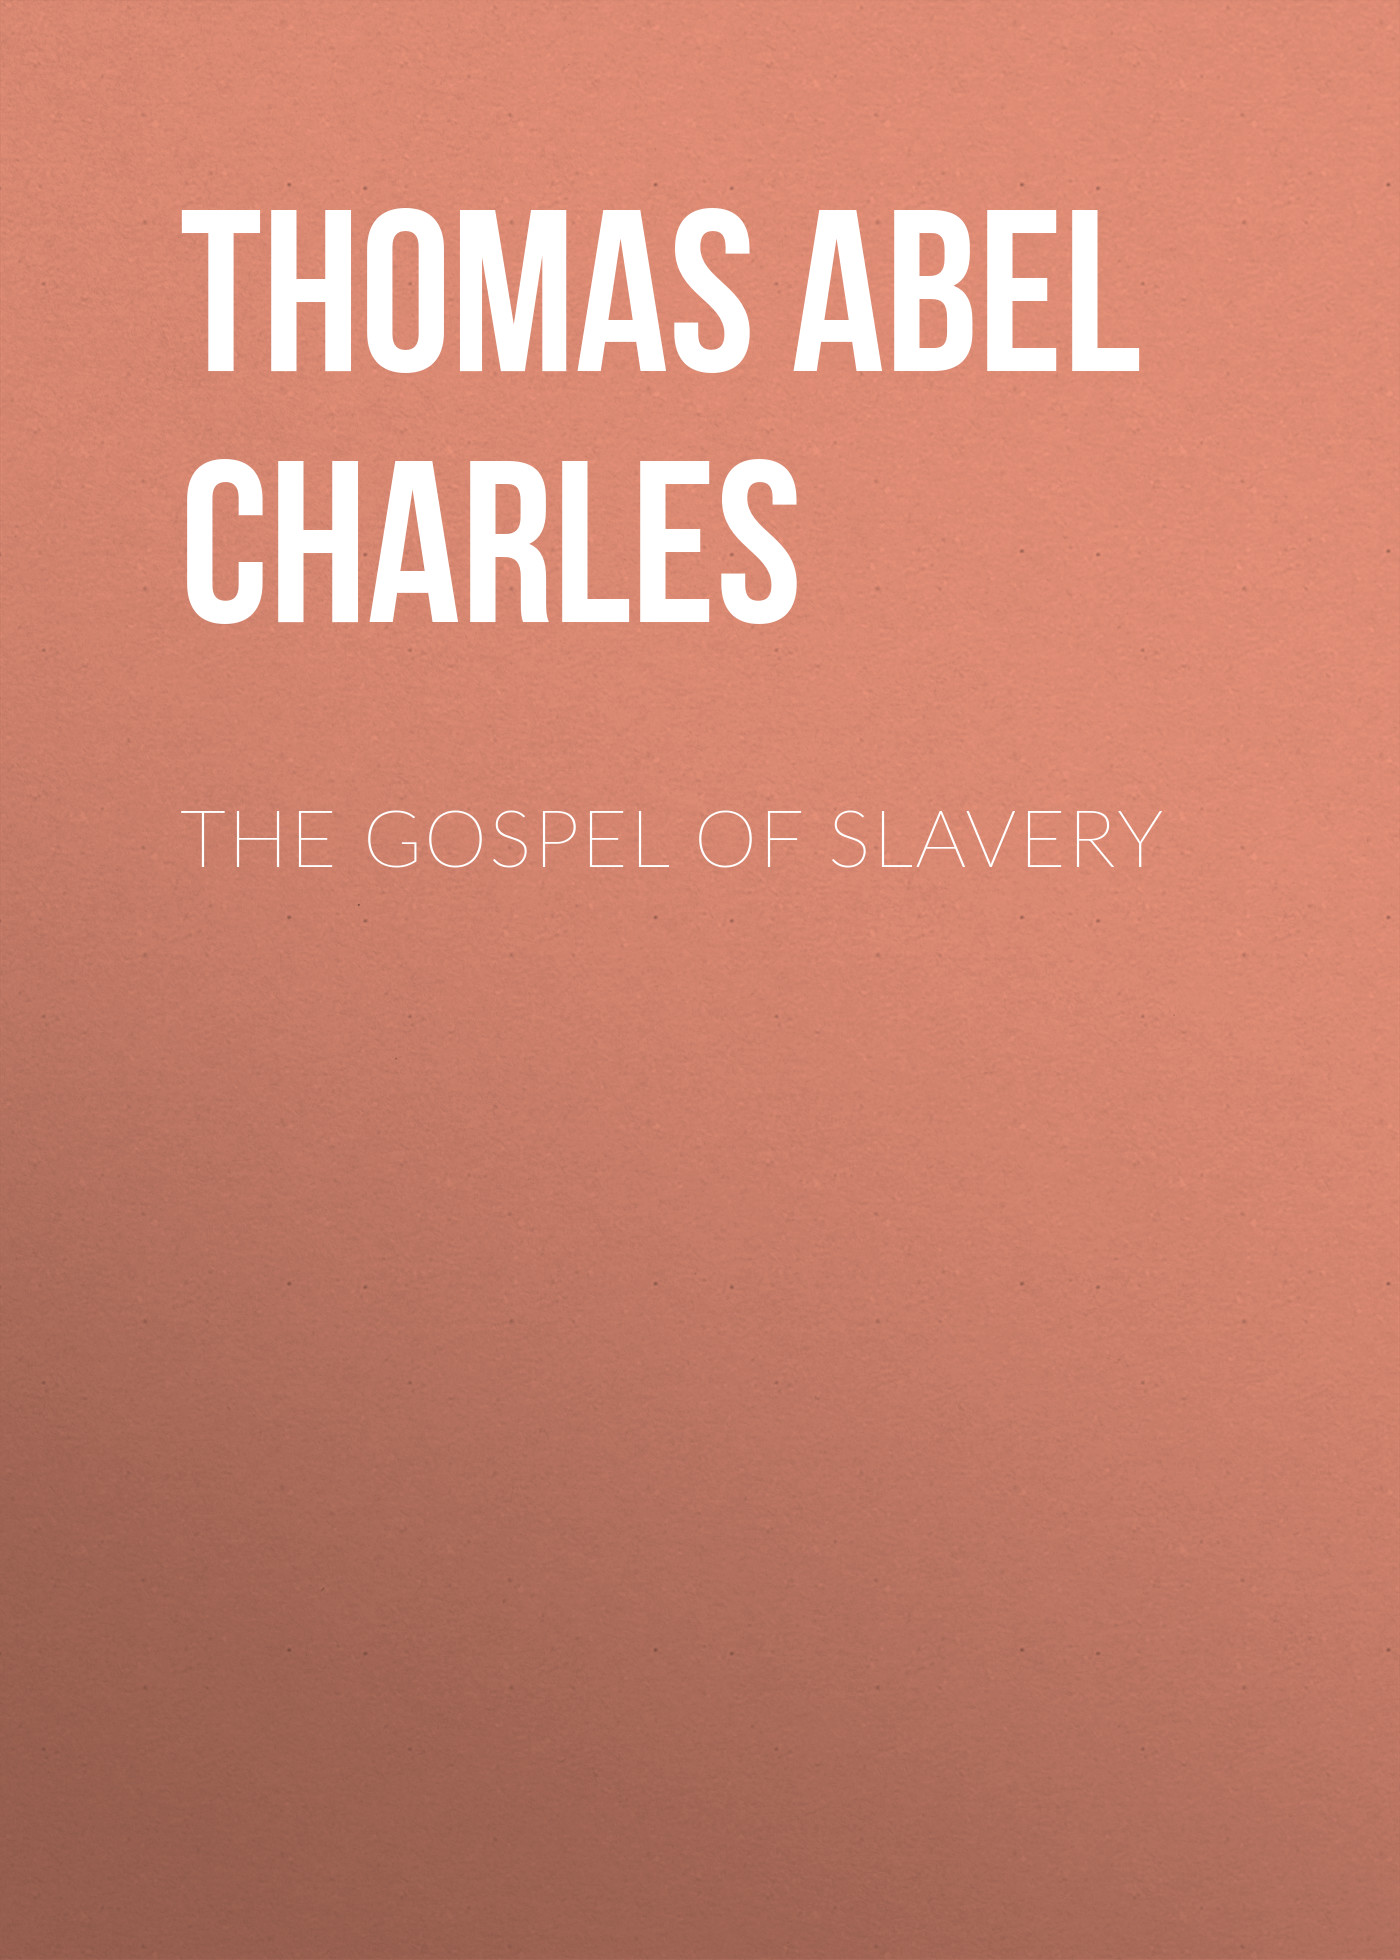 The Gospel of Slavery